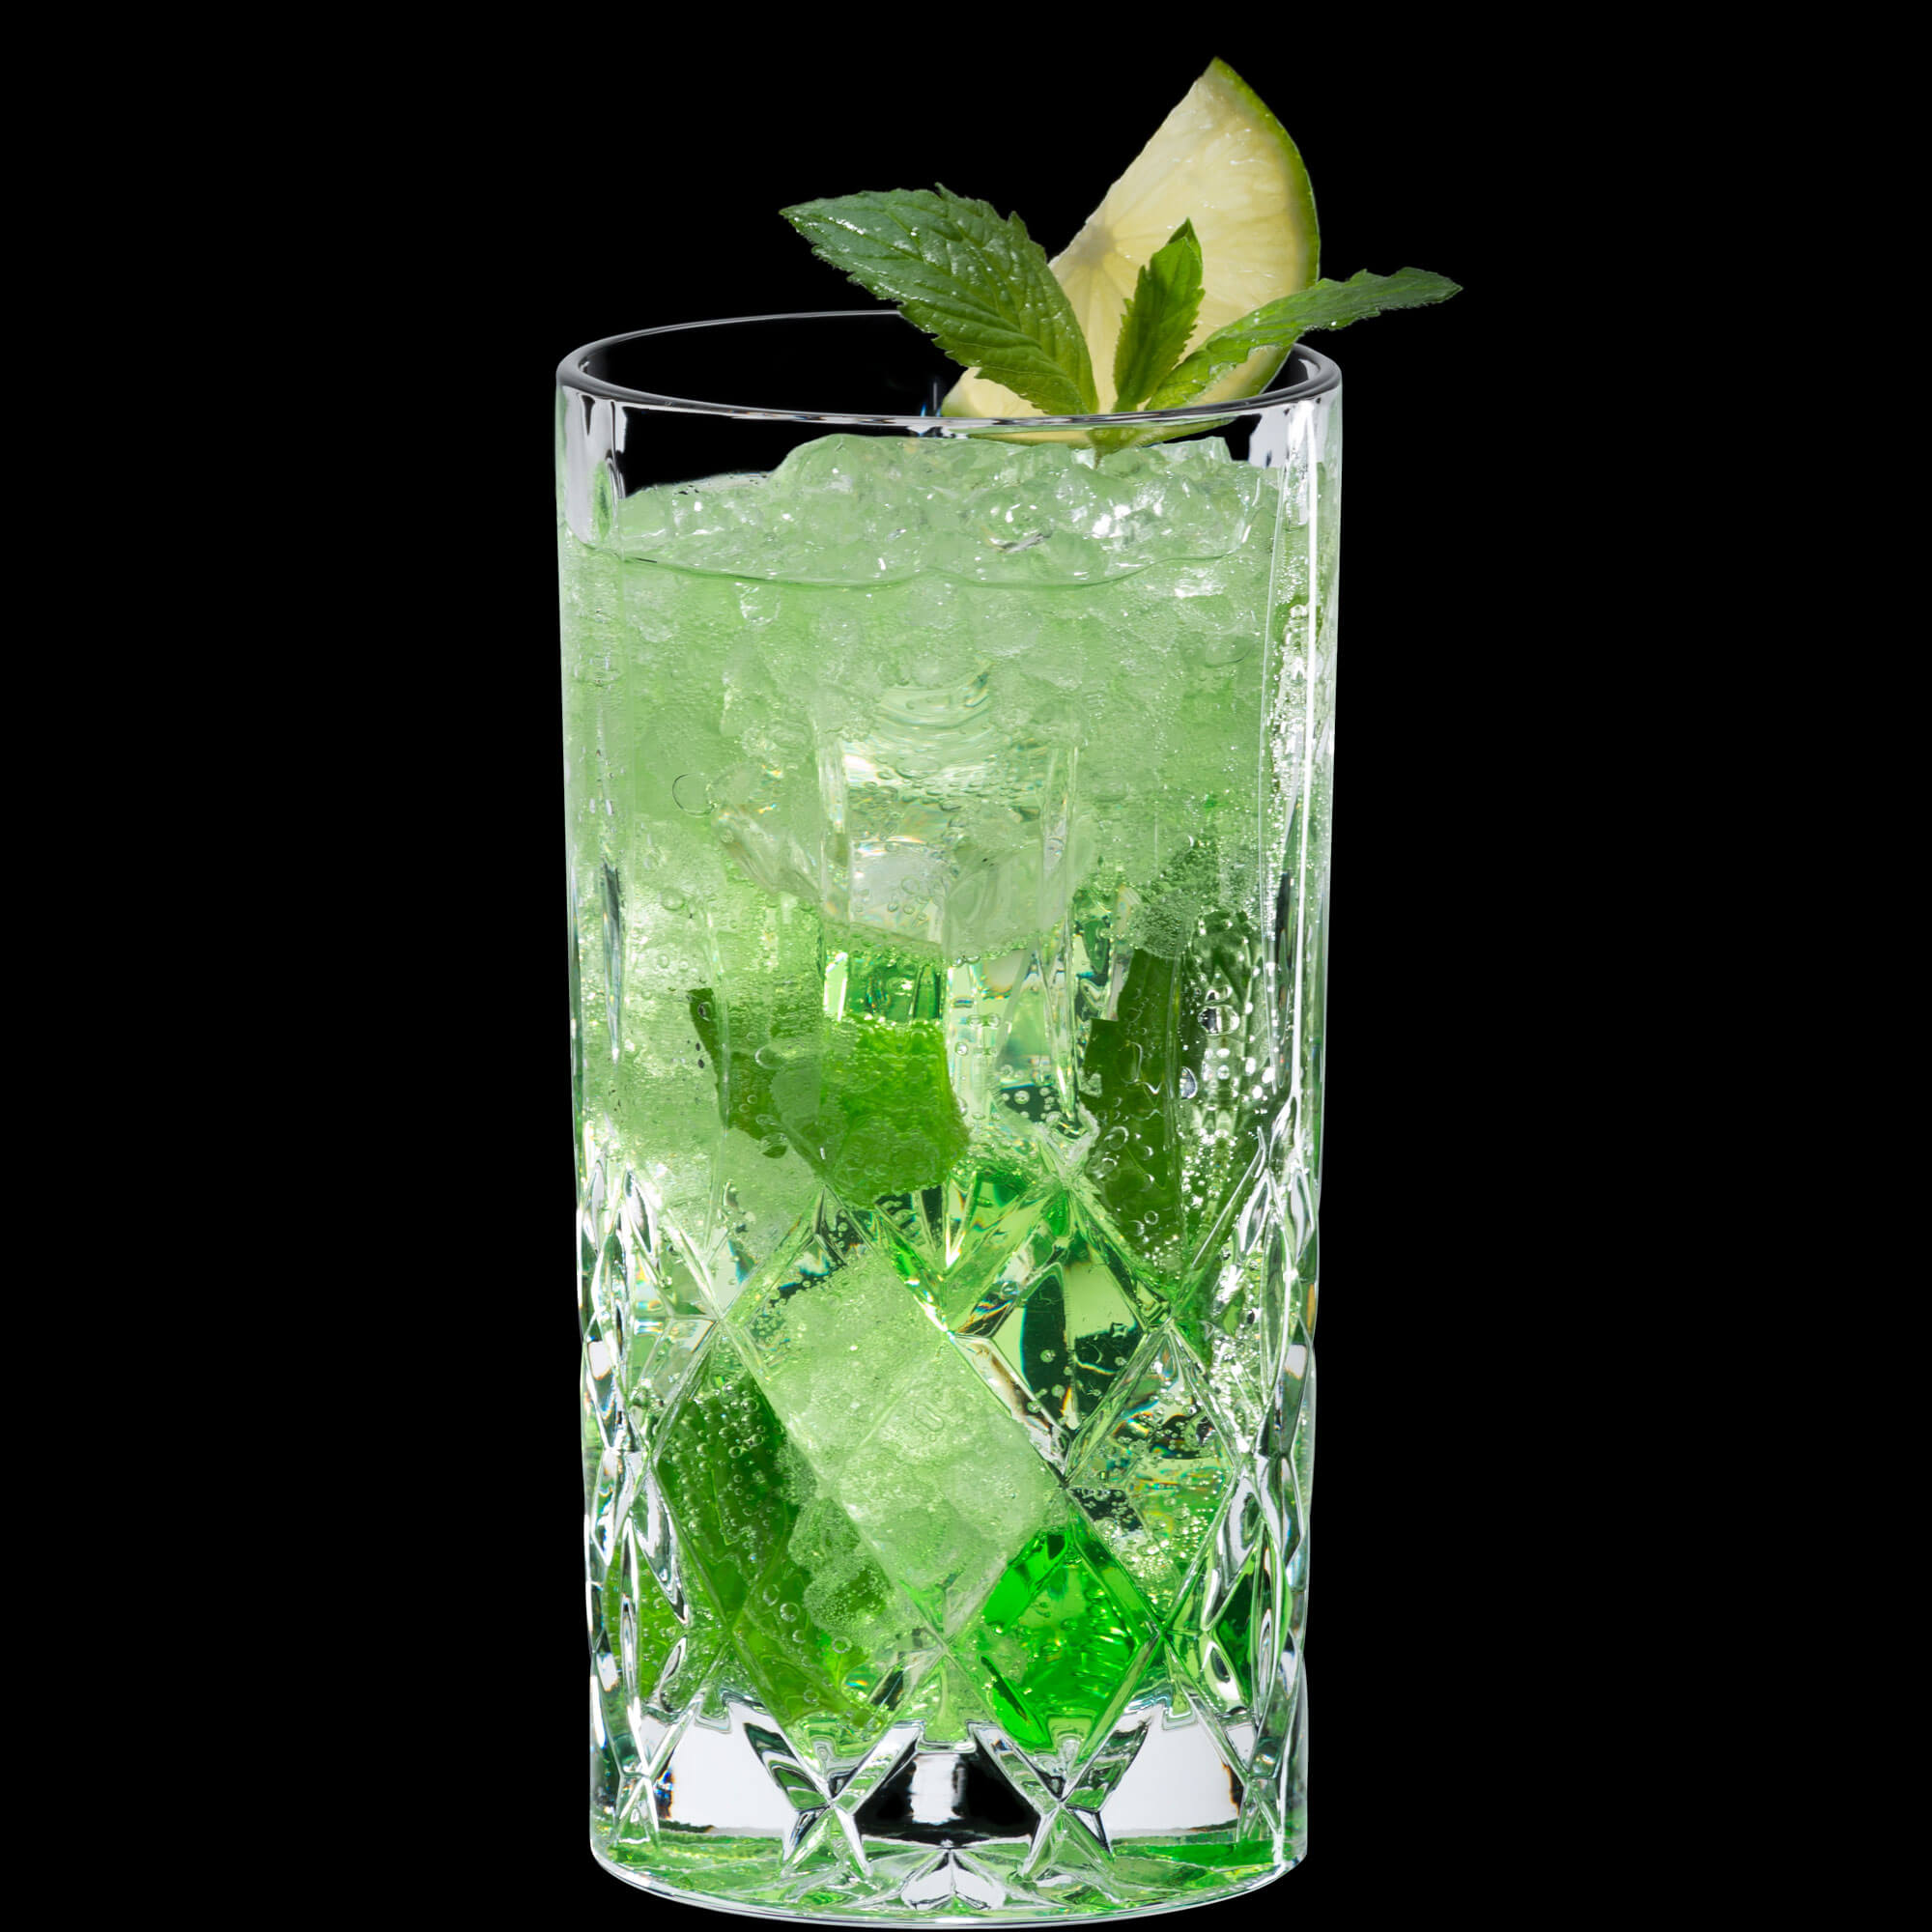 Long drink glass Spey, Riedel - 375ml (2 pcs.)